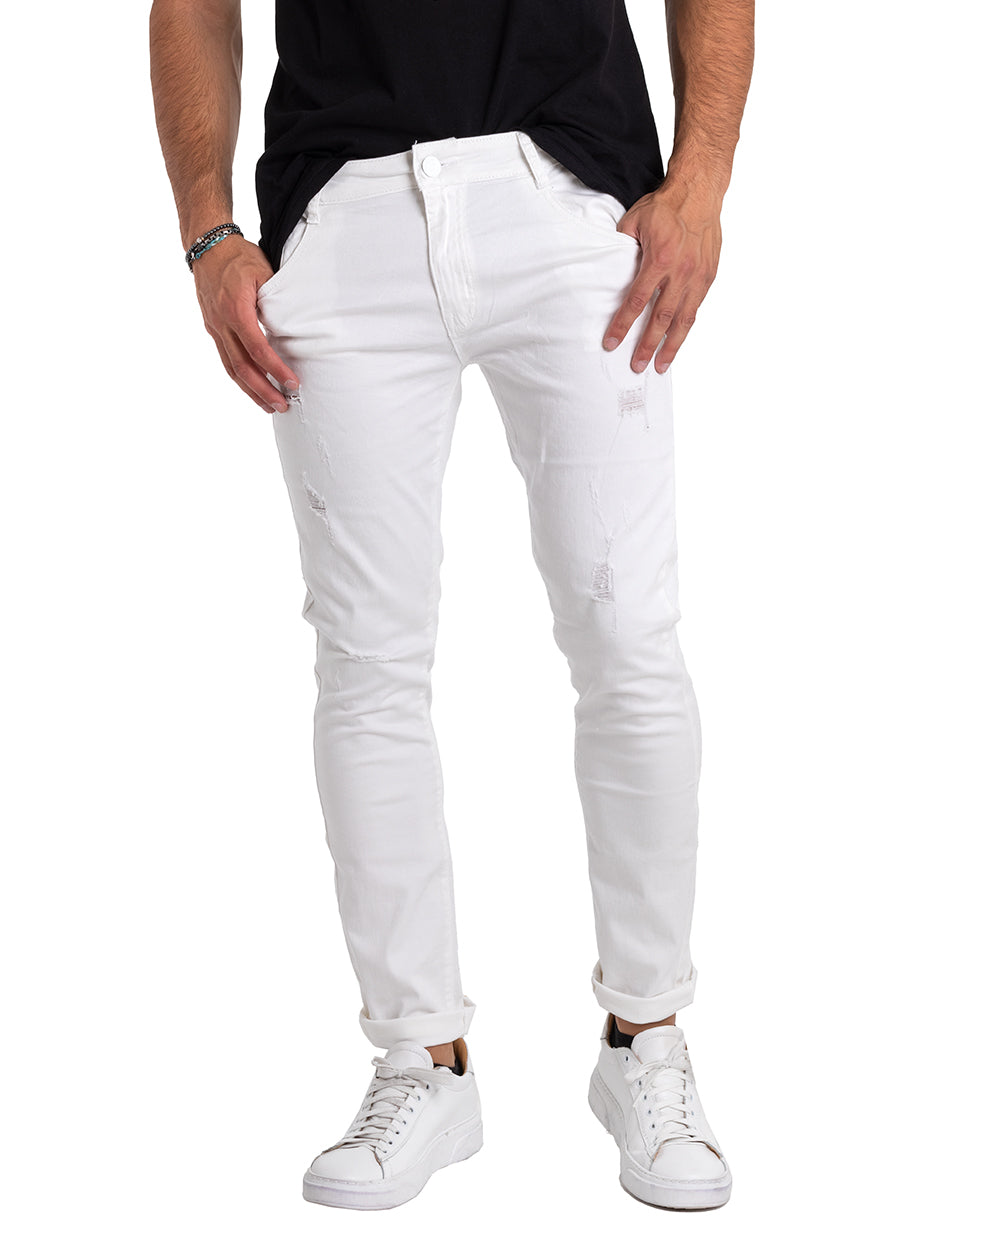 Pantaloni Jeans Uomo Slim Fit Bianco Rotture Abrasioni Cinque Tasche Casual GIOSAL-P5374A